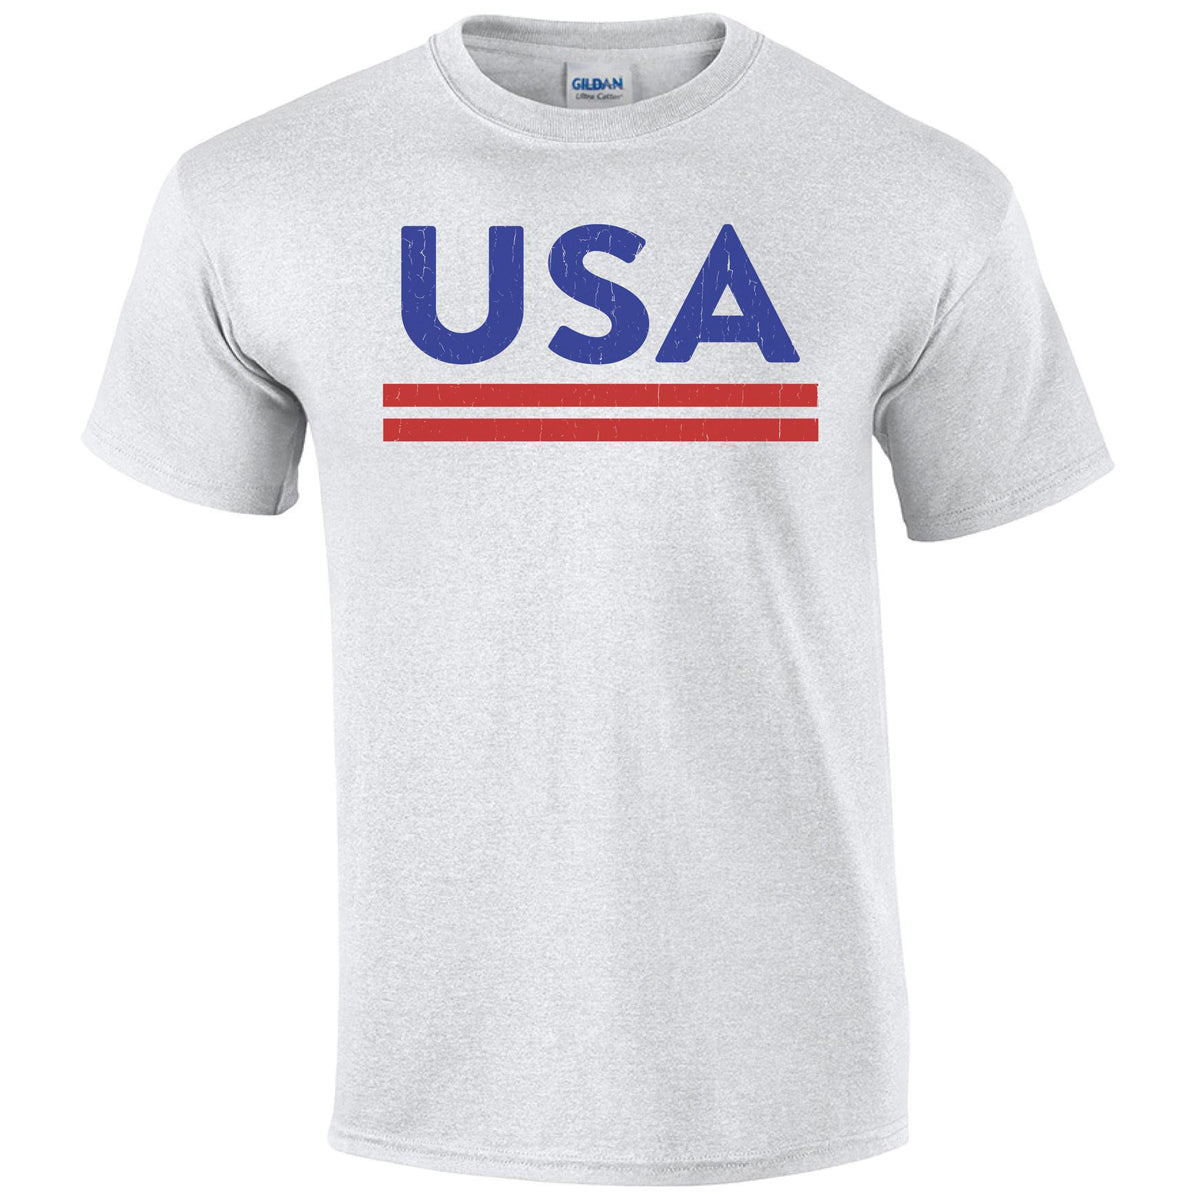 USA Soccer T-Shirt - USA T-shirts 411 Youth Medium Ash Youth